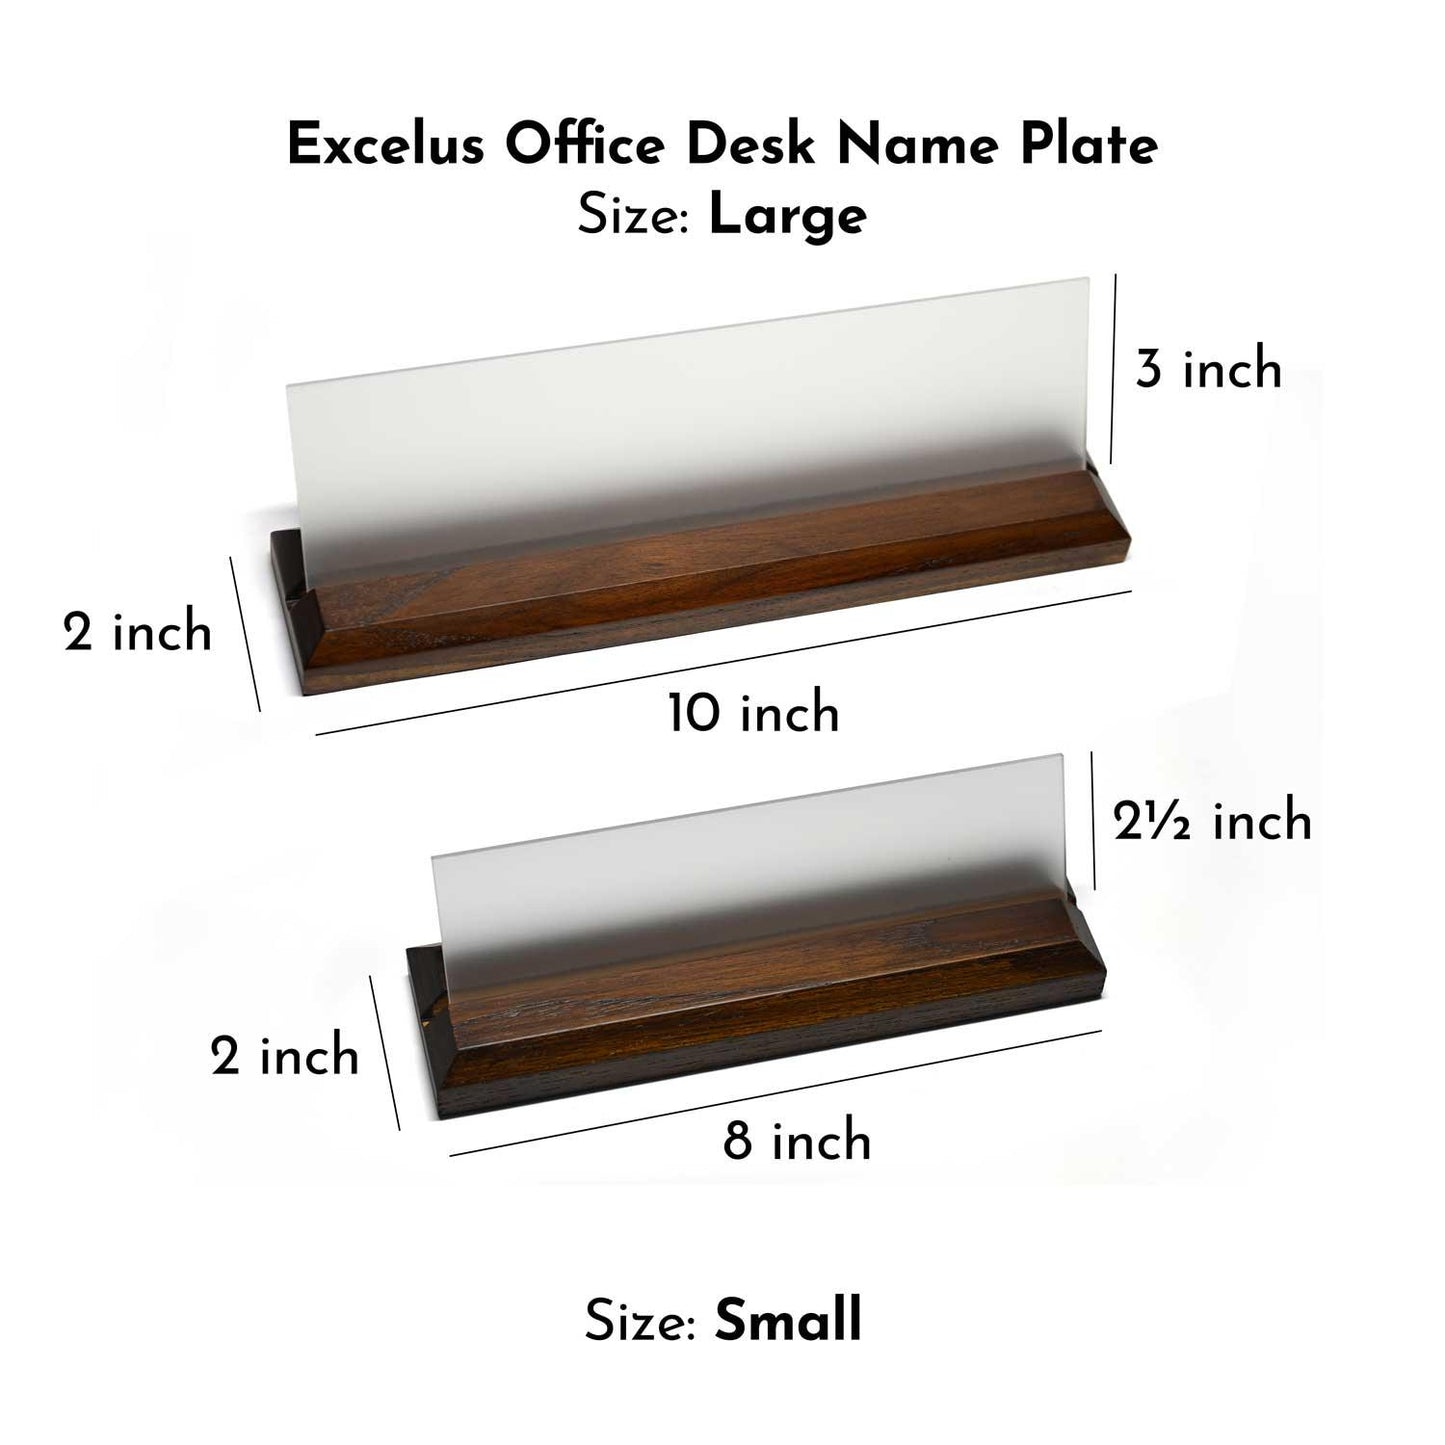 Excelus Office Desk Name Plate - Tarot Card Reader - Housenama